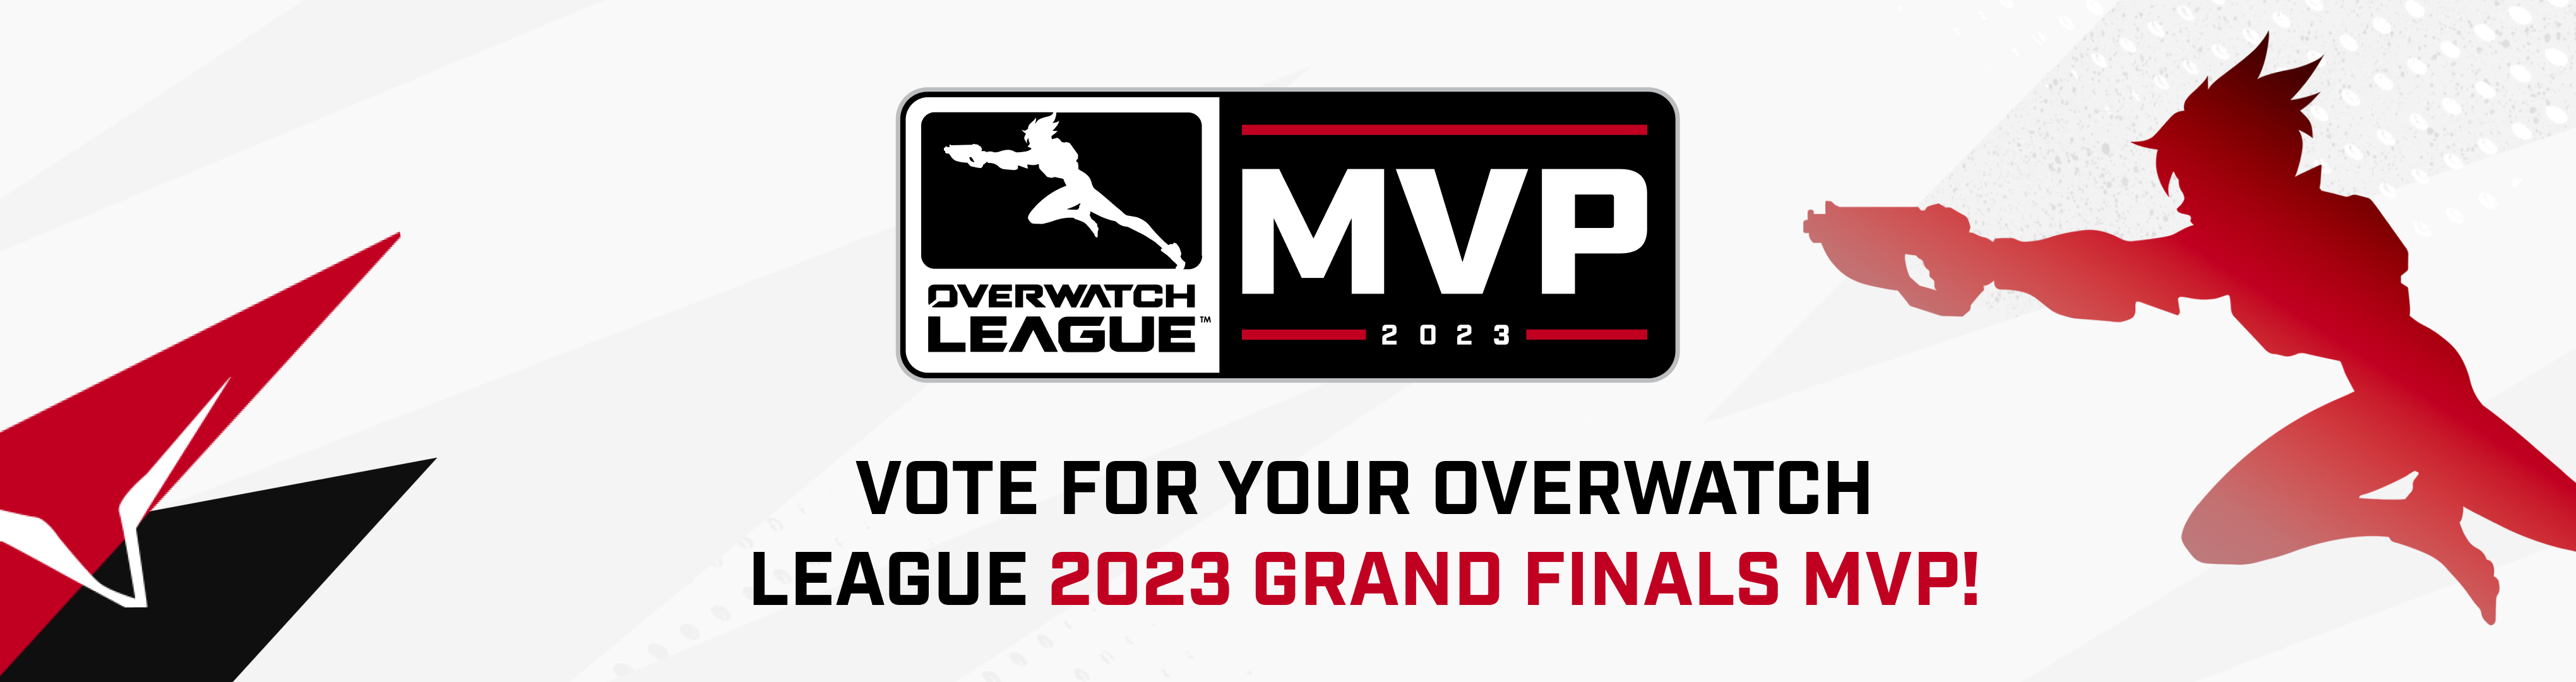 2023 Overwatch League Grand Finals MVP The Overwatch League